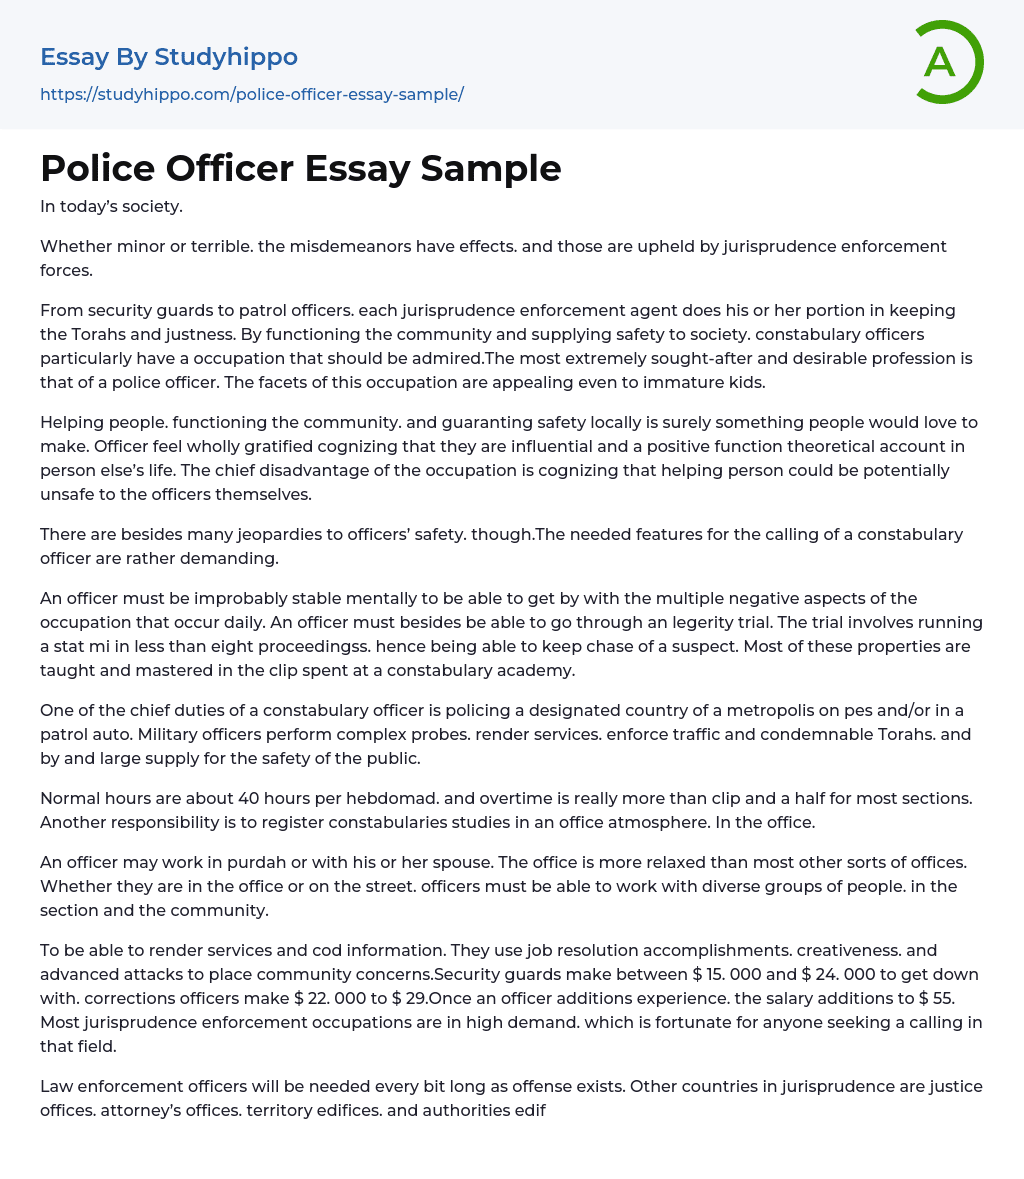 Police Officer Essay Sample